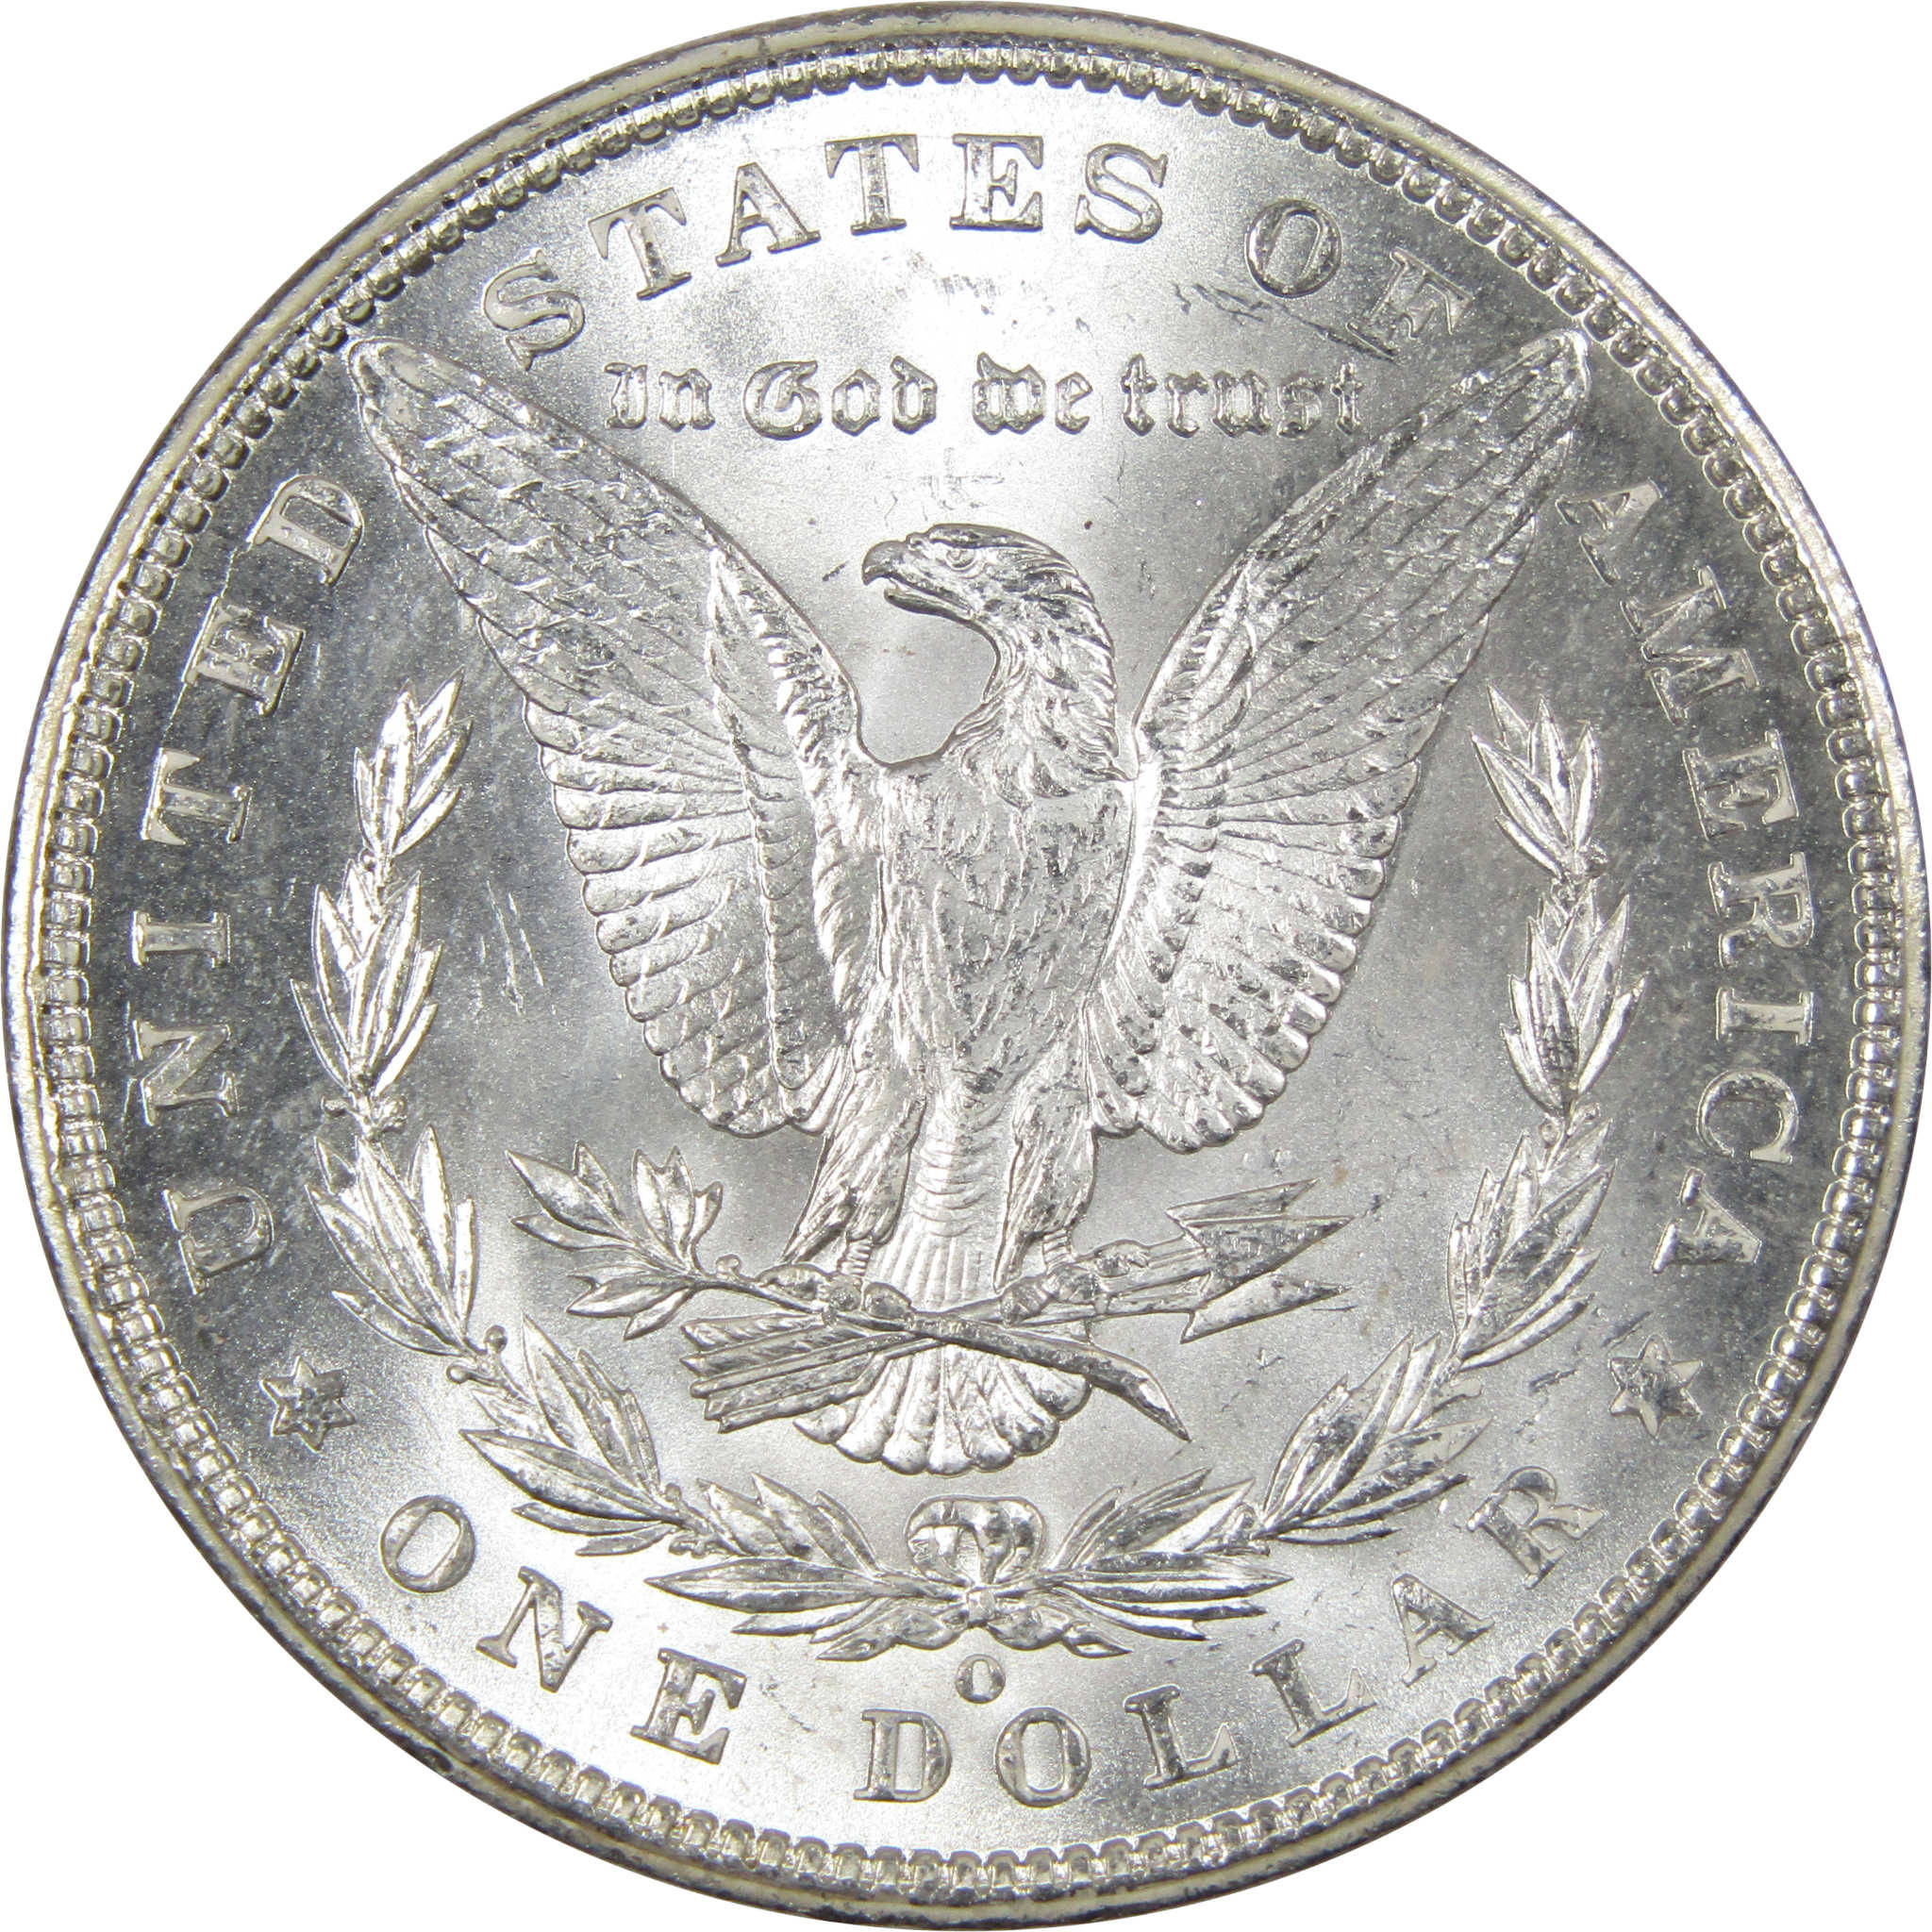 1900 O Morgan Dollar BU Uncirculated Mint State 90% Silver SKU:IPC9767 - Morgan coin - Morgan silver dollar - Morgan silver dollar for sale - Profile Coins &amp; Collectibles